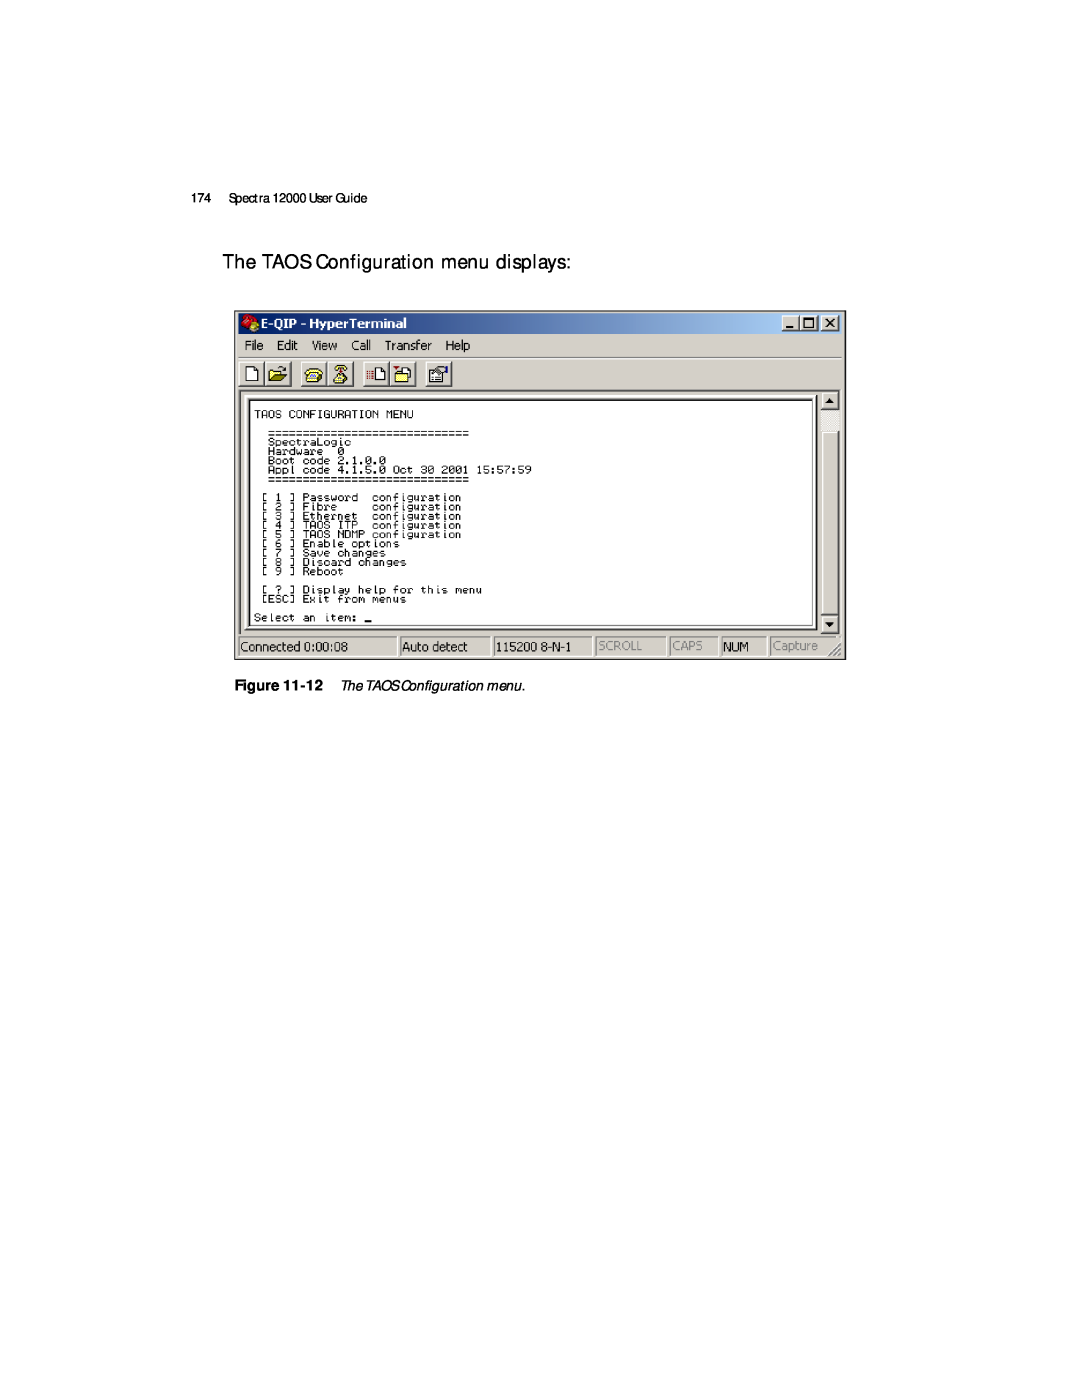 Spectra Logic manual 12 The TAOS Configuration menu, Spectra 12000 User Guide 